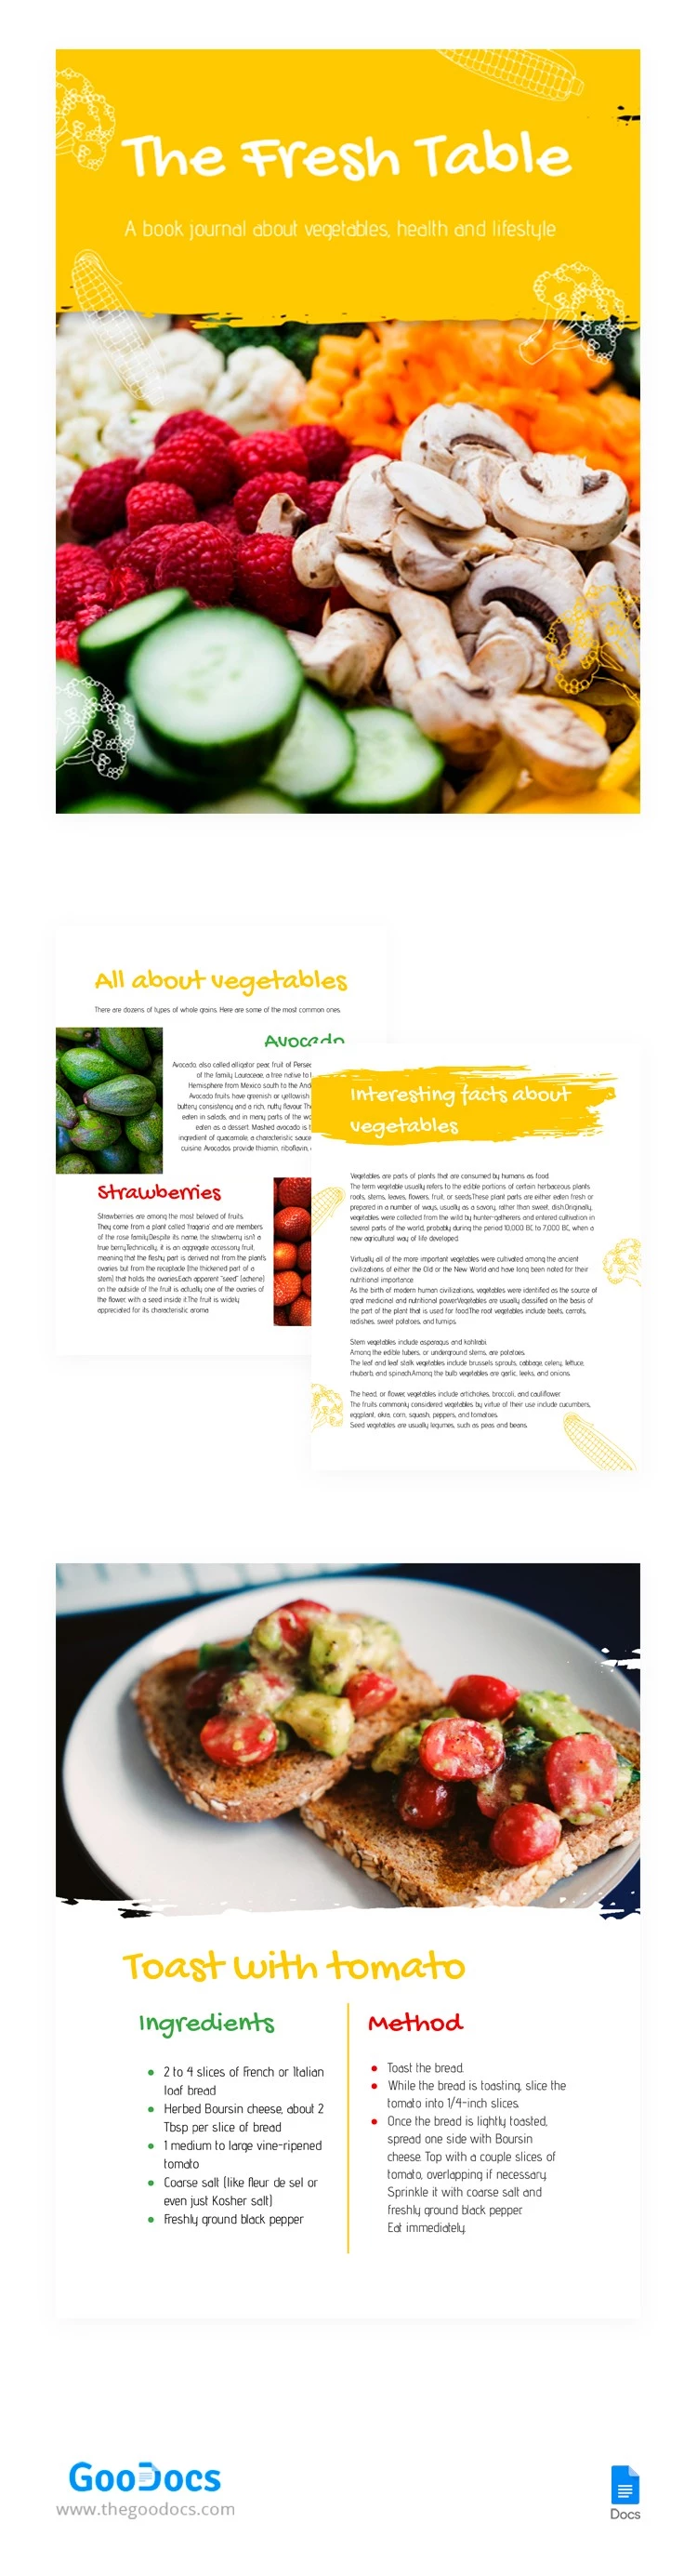 Livro de Legumes Coloridos - free Google Docs Template - 10062921